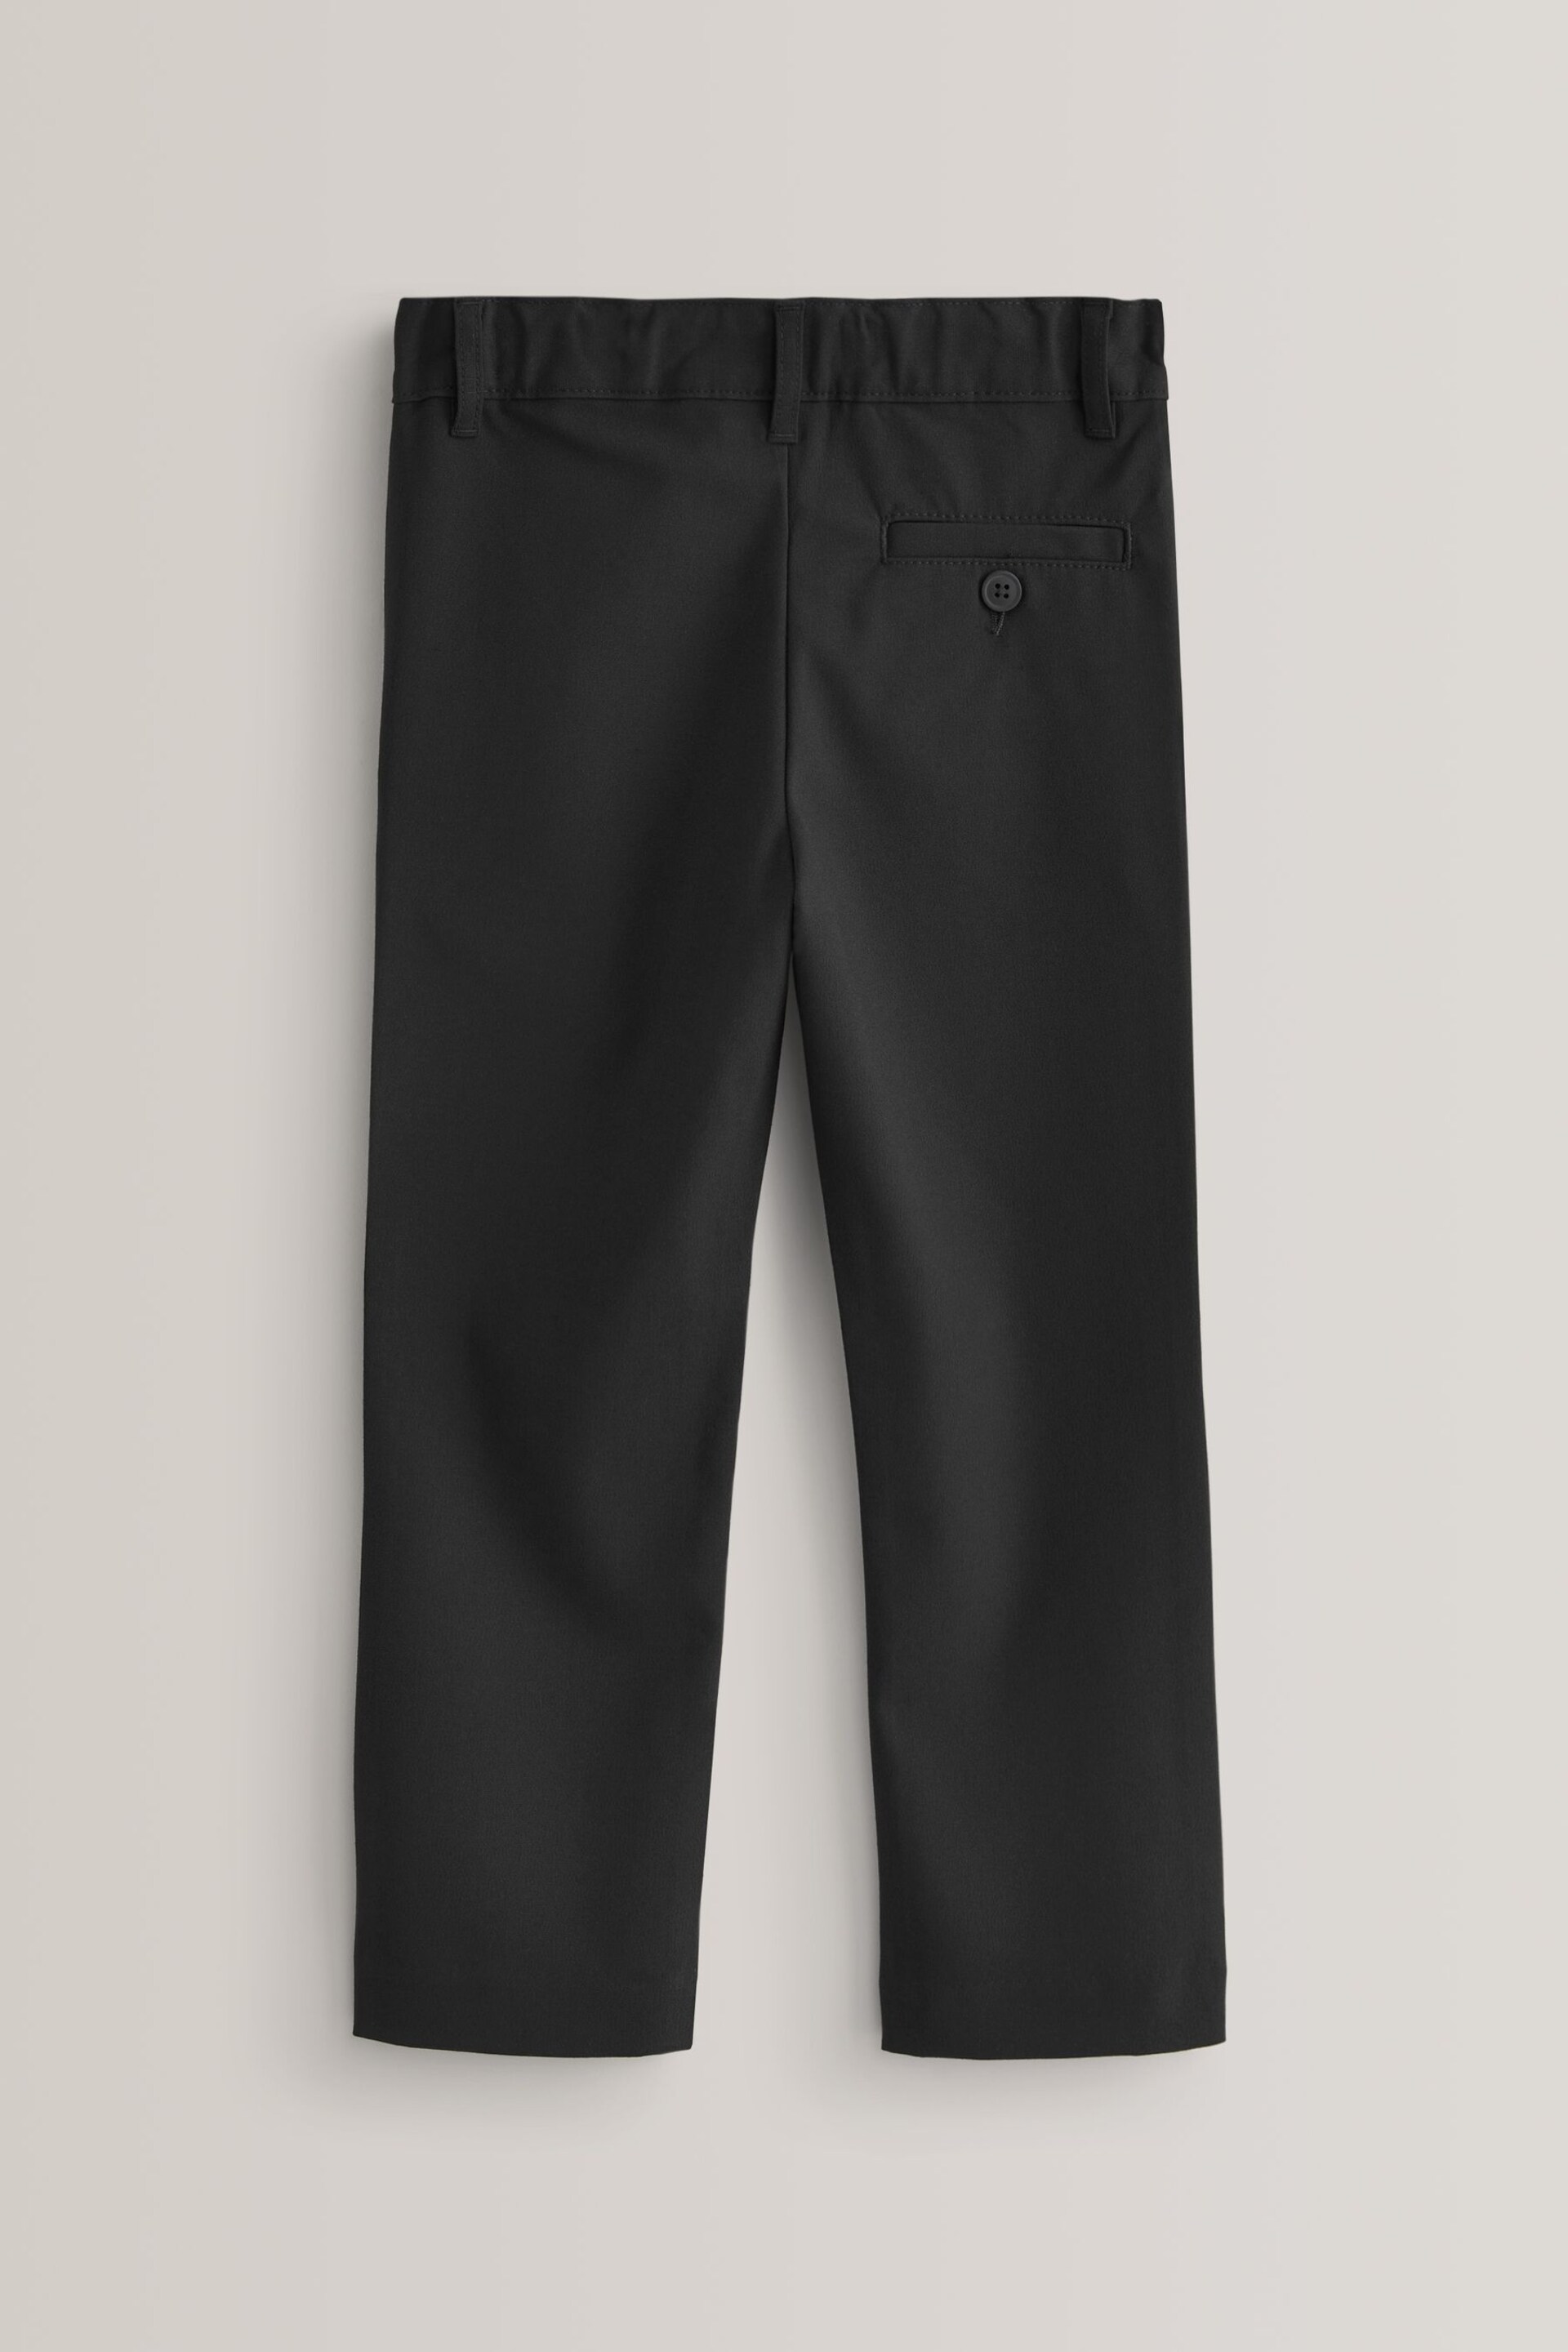 Black Regular Waist School Formal Stretch Skinny Trousers (3-17yrs) - Image 2 of 7